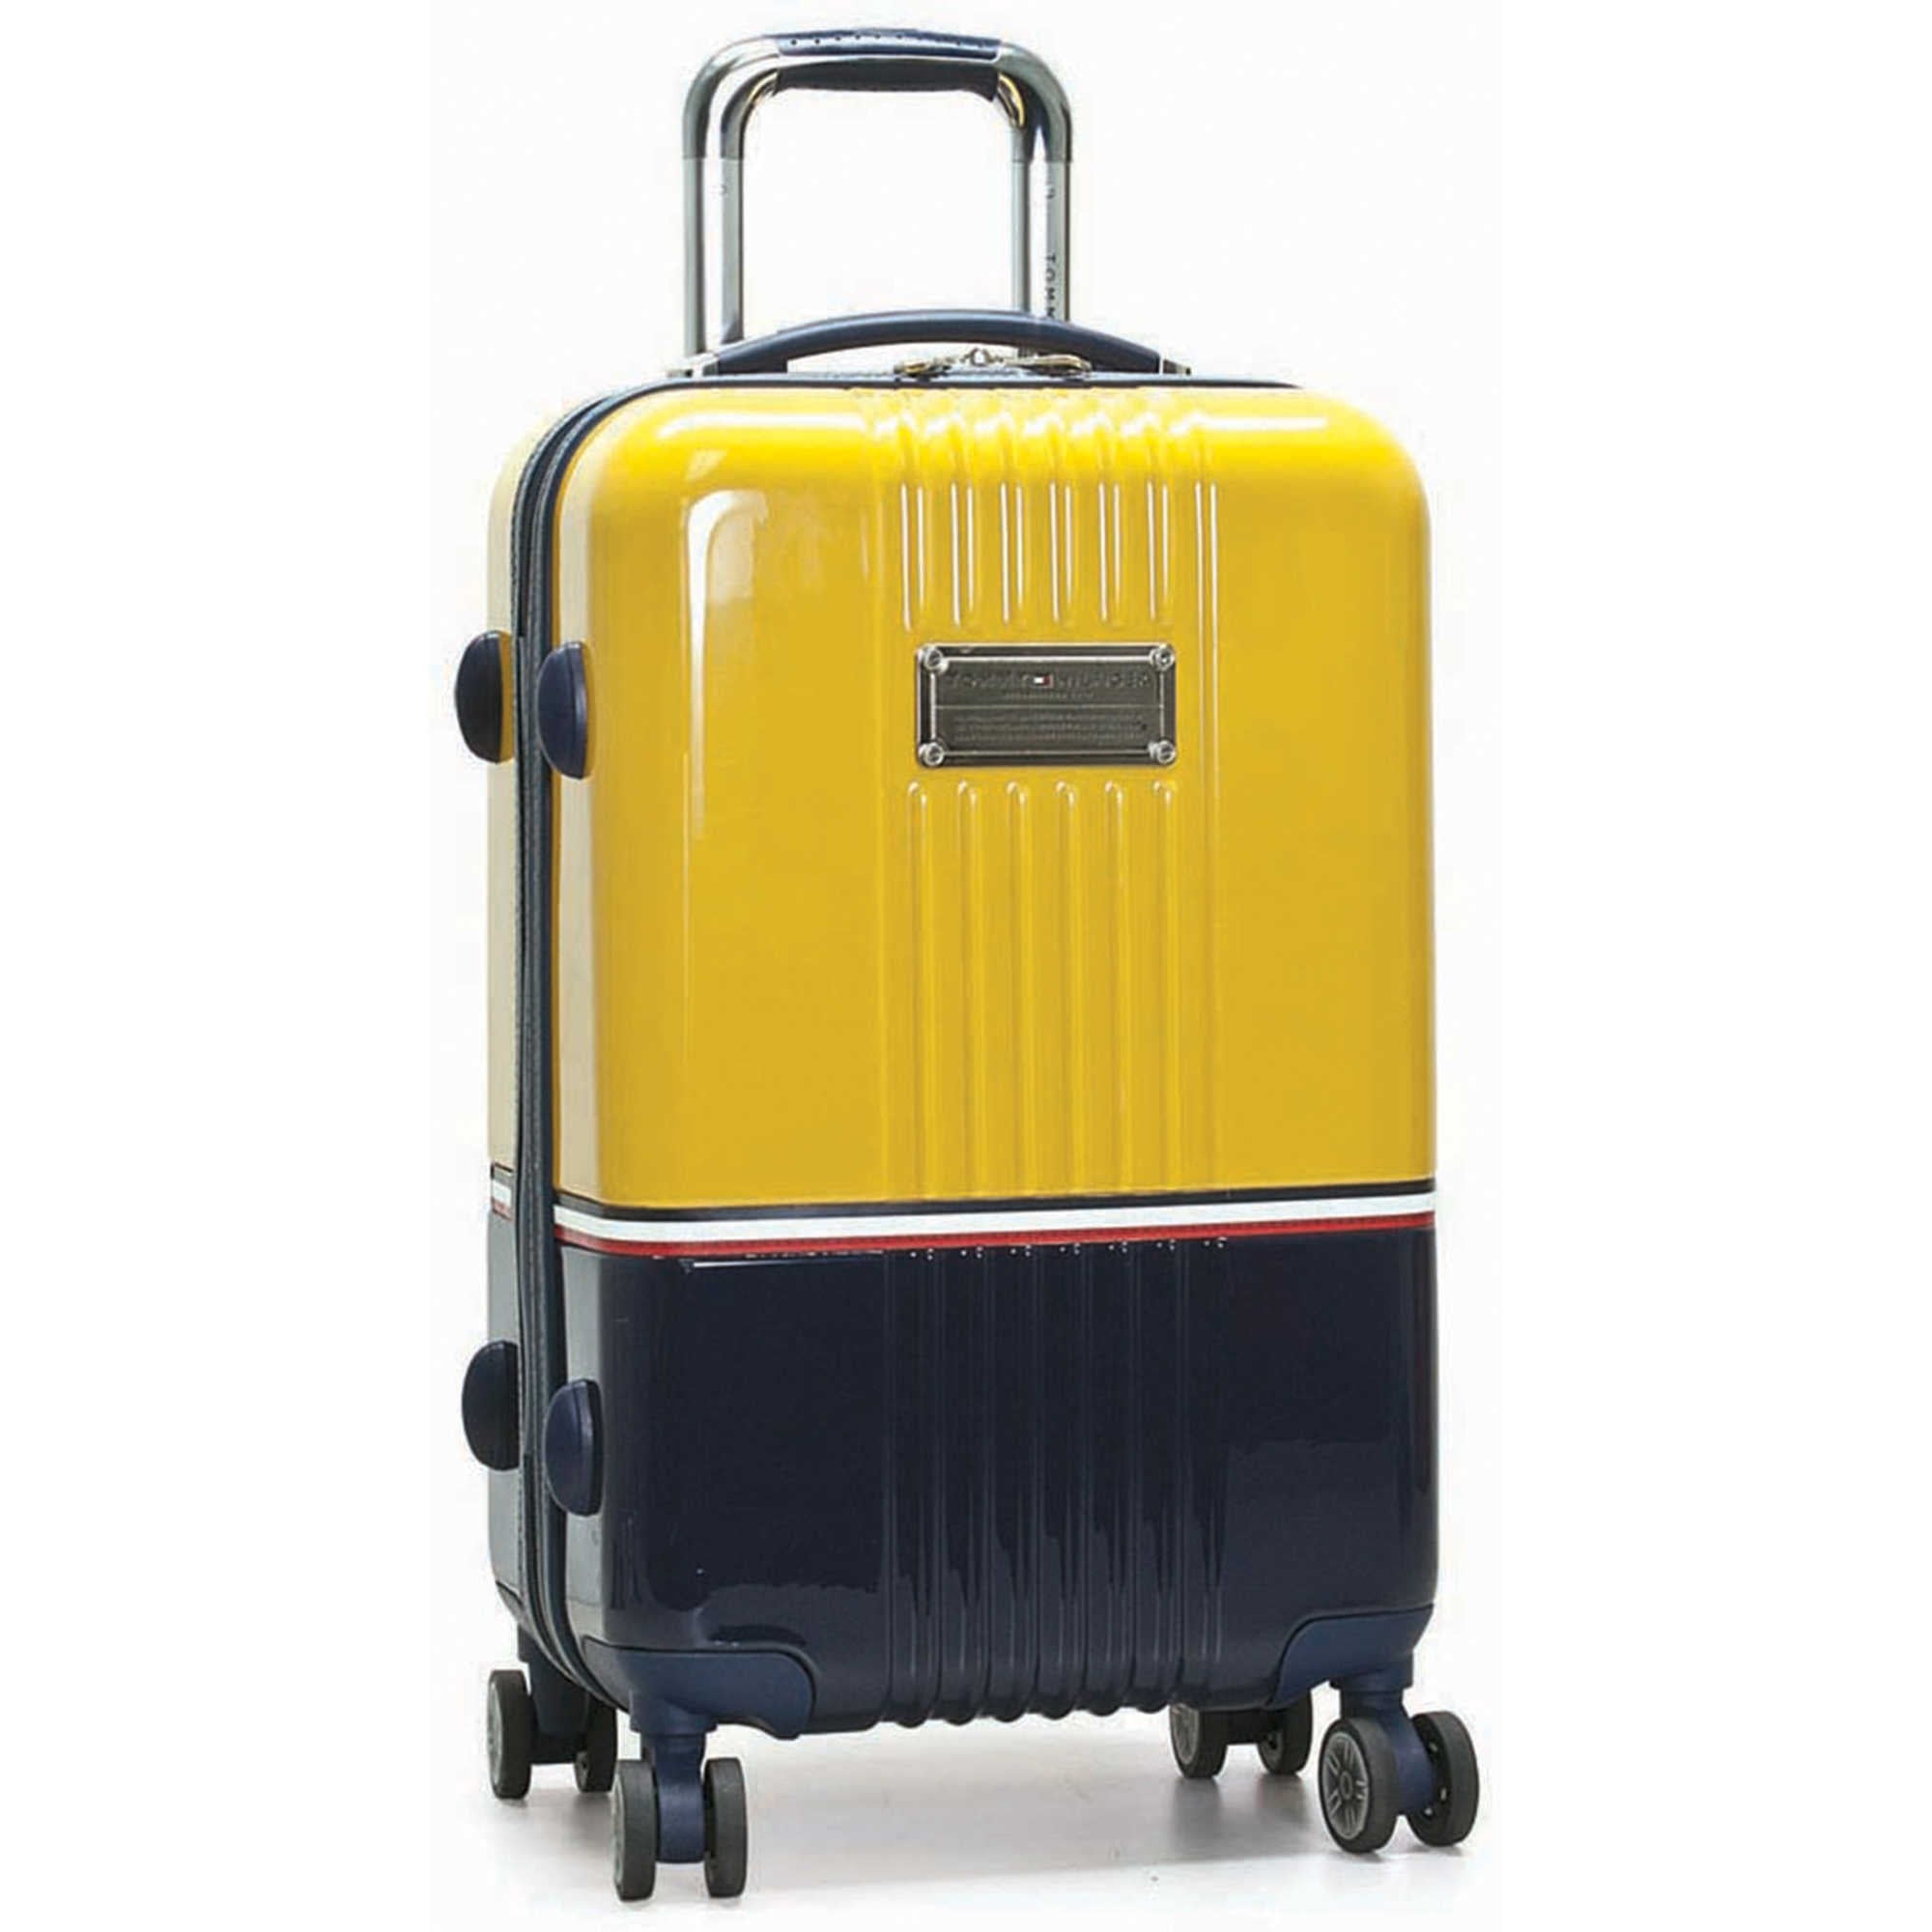 tommy hilfiger luggage yellow